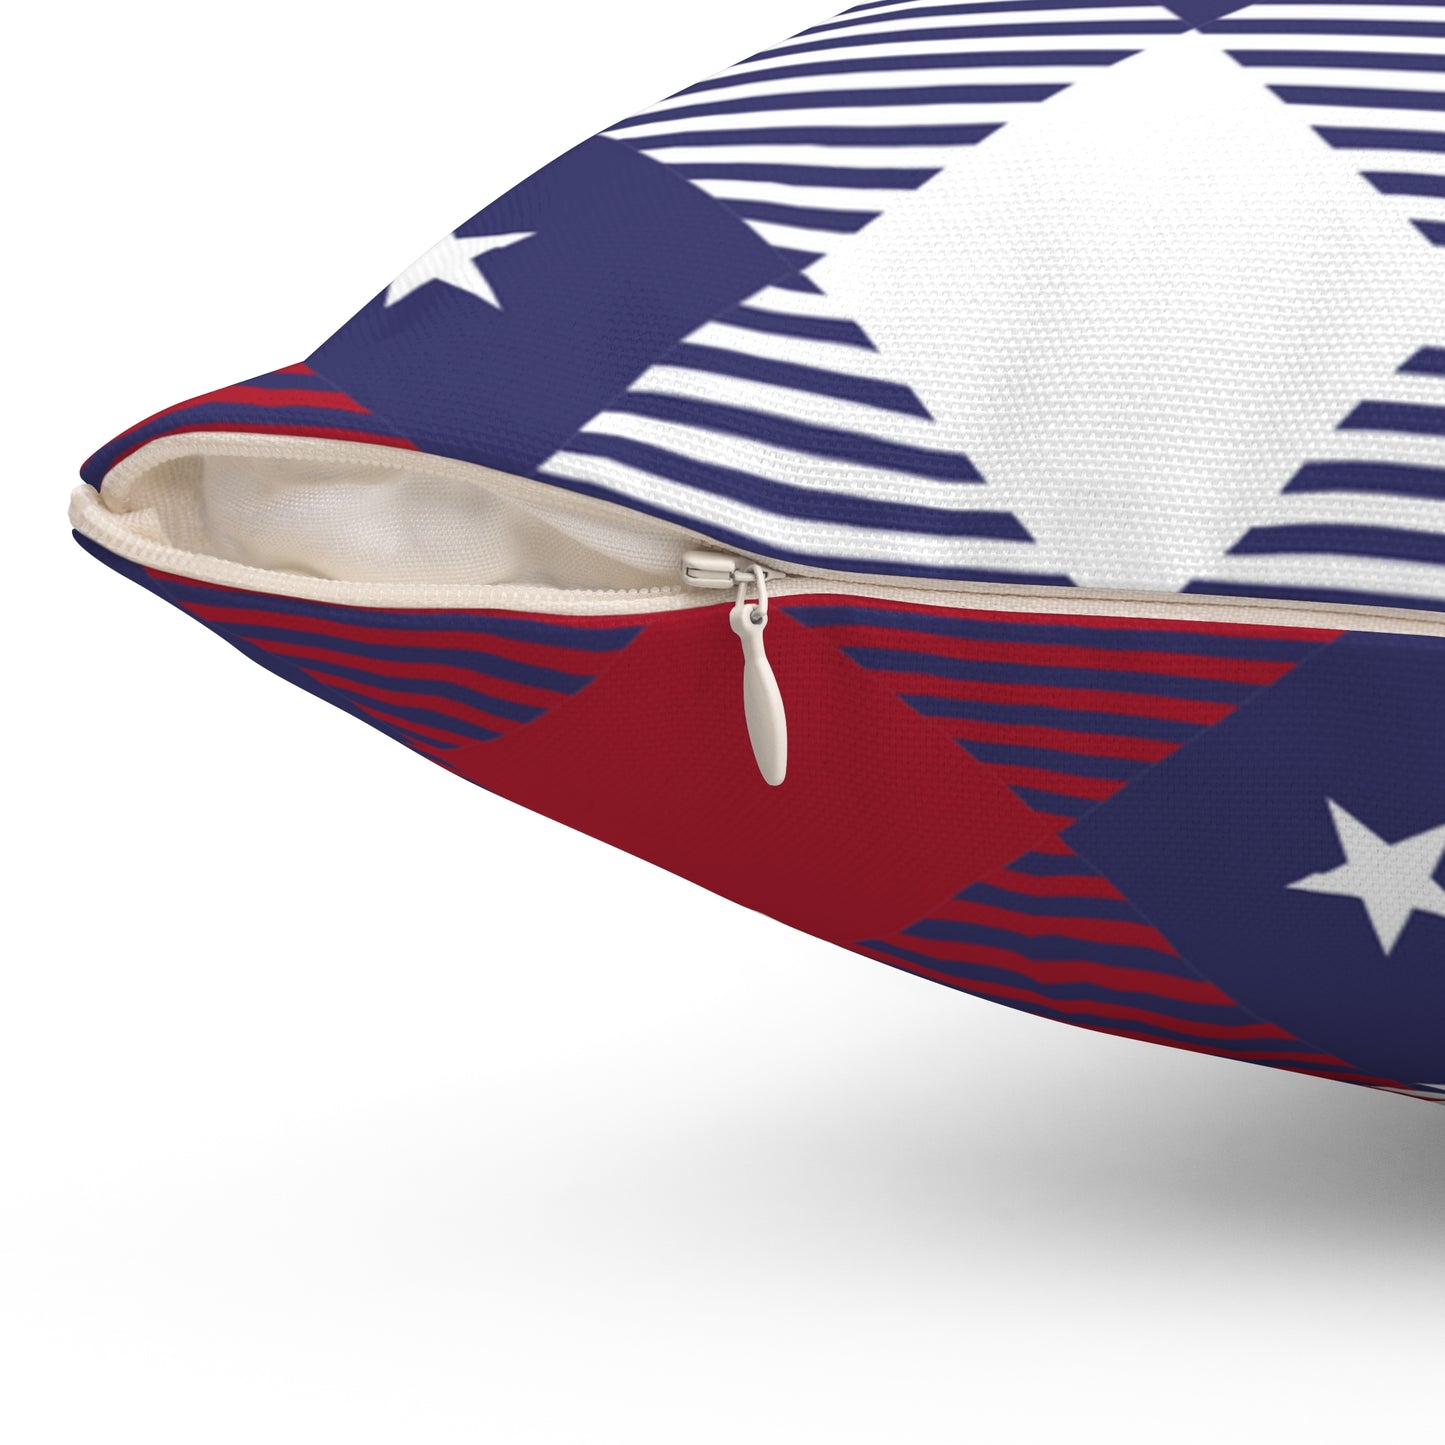 Patriotic | Spun Polyester Square Pillow